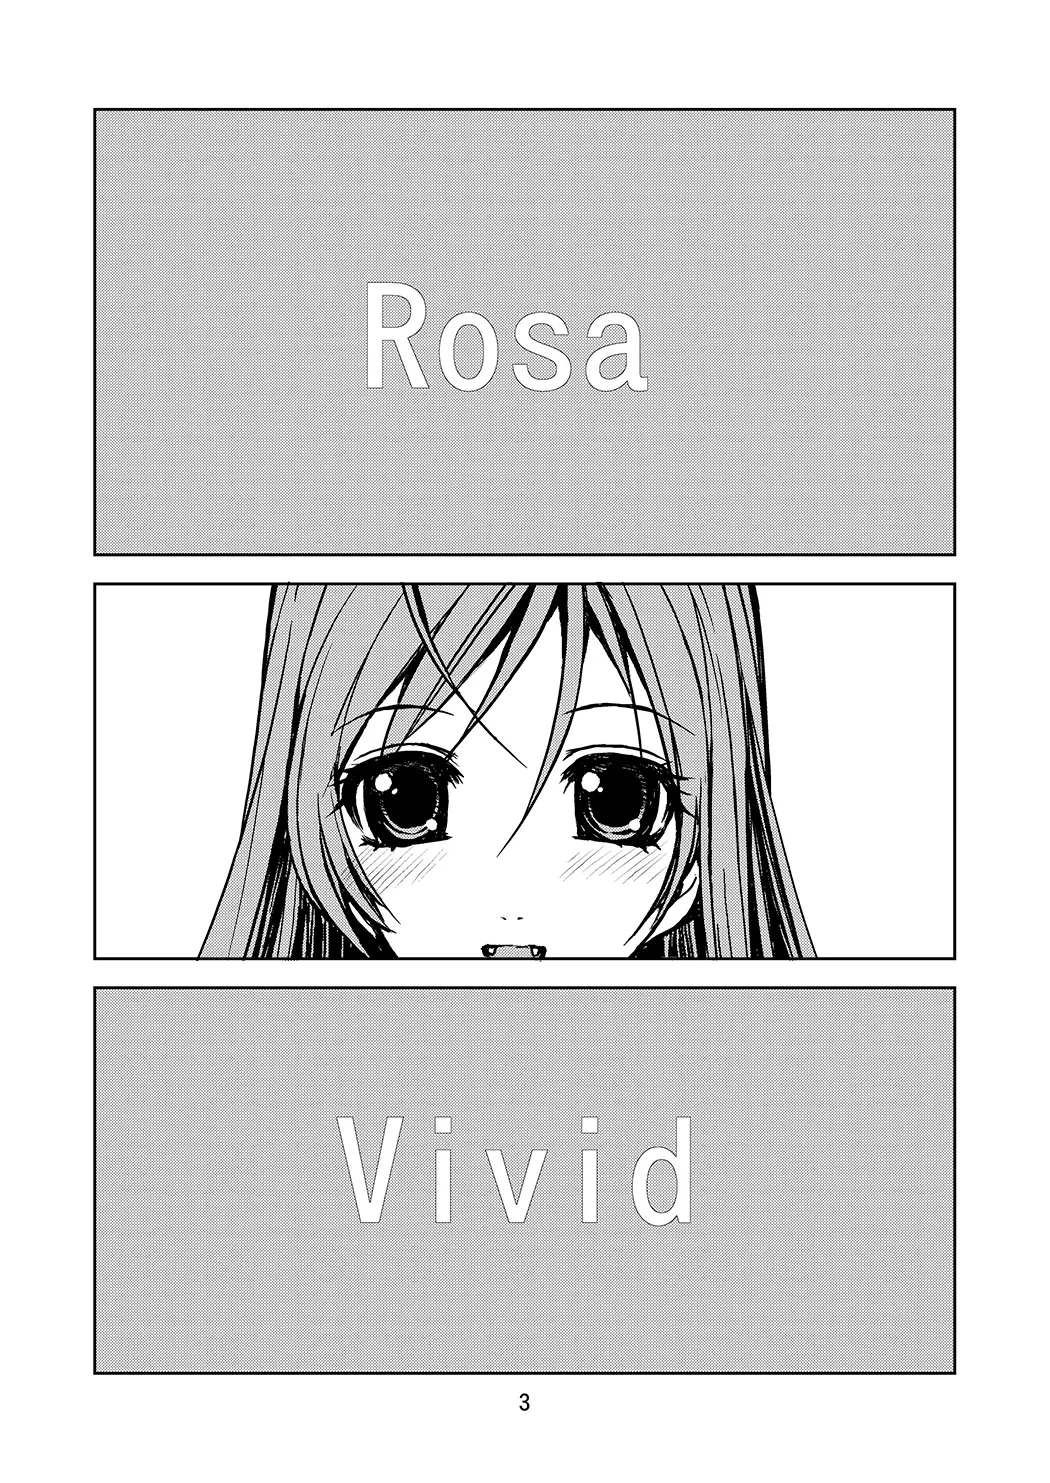 RV - Rosa Viva试读2P